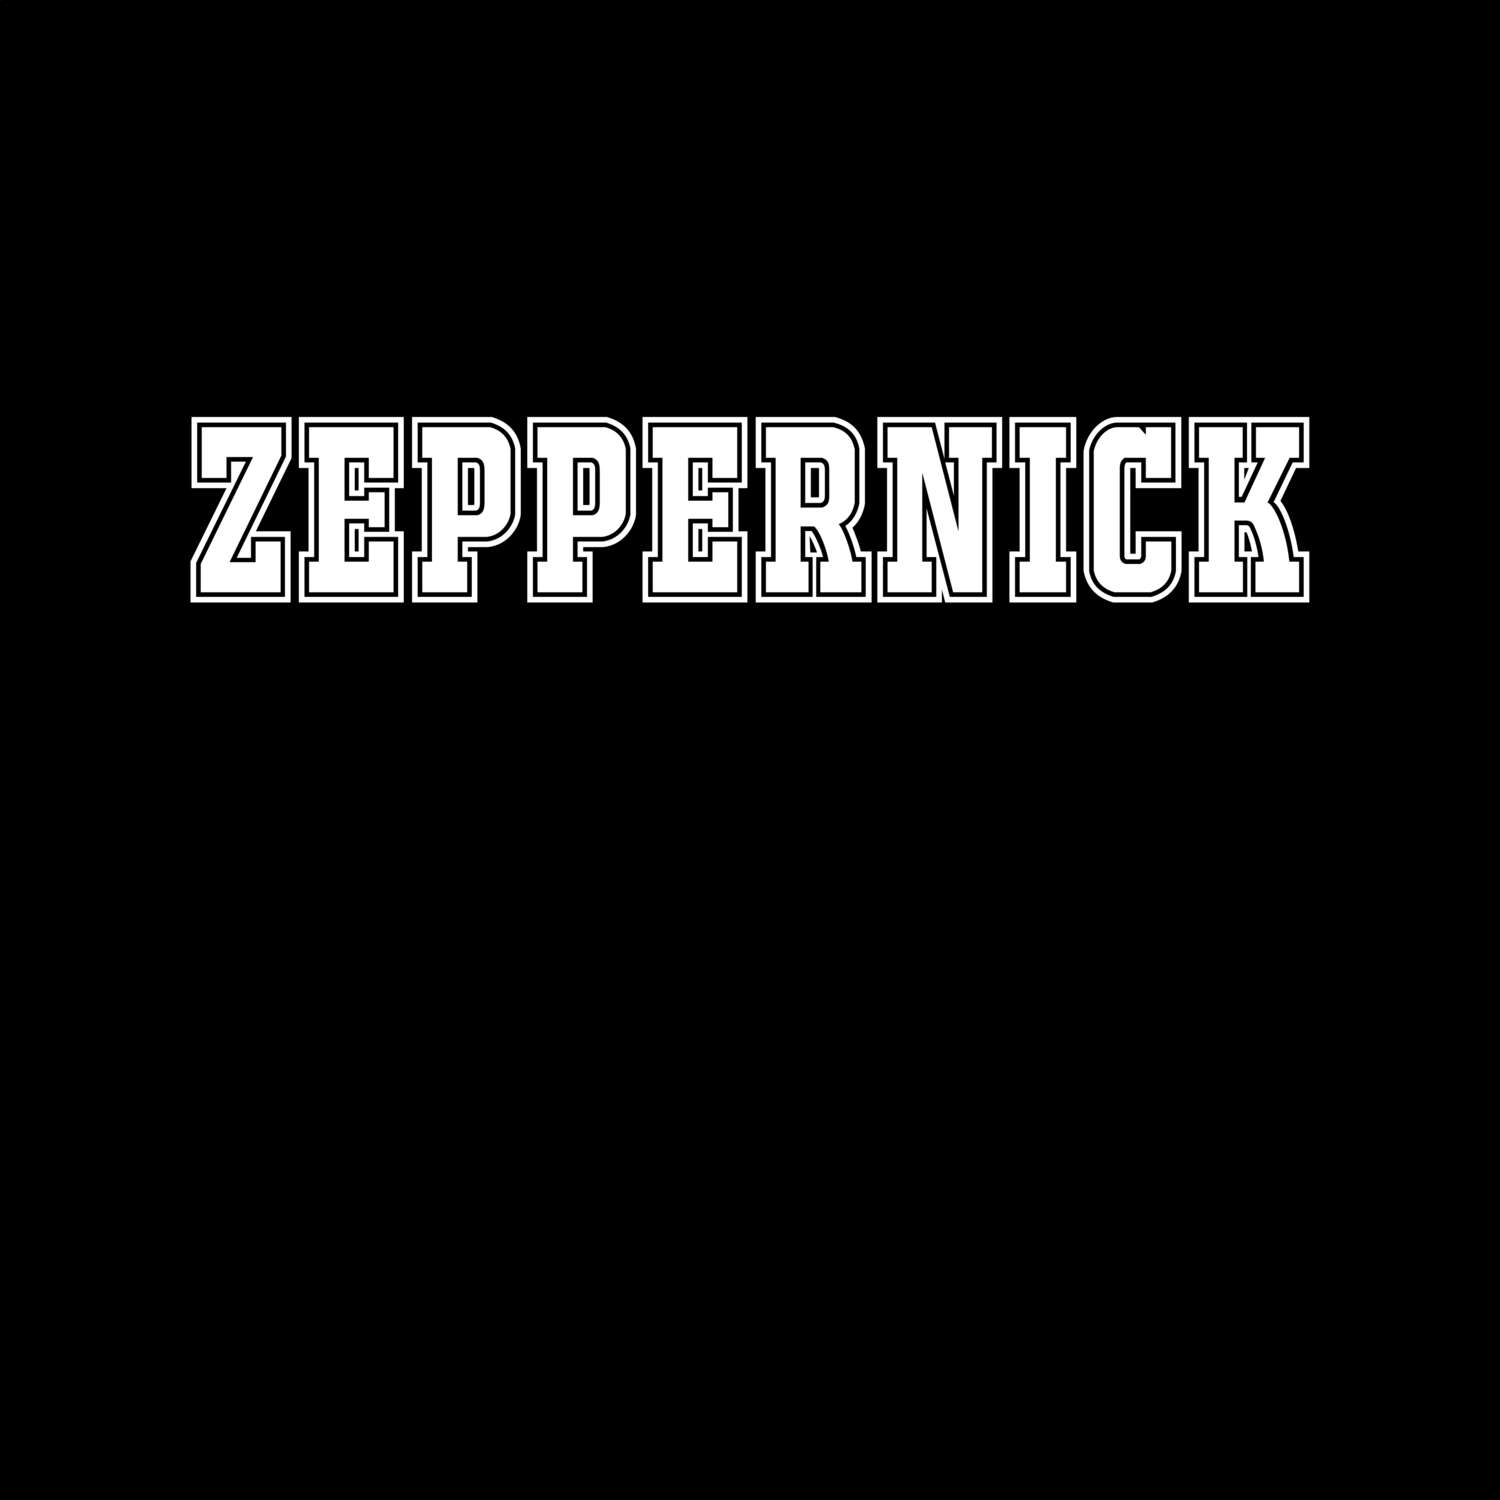 Zeppernick T-Shirt »Classic«